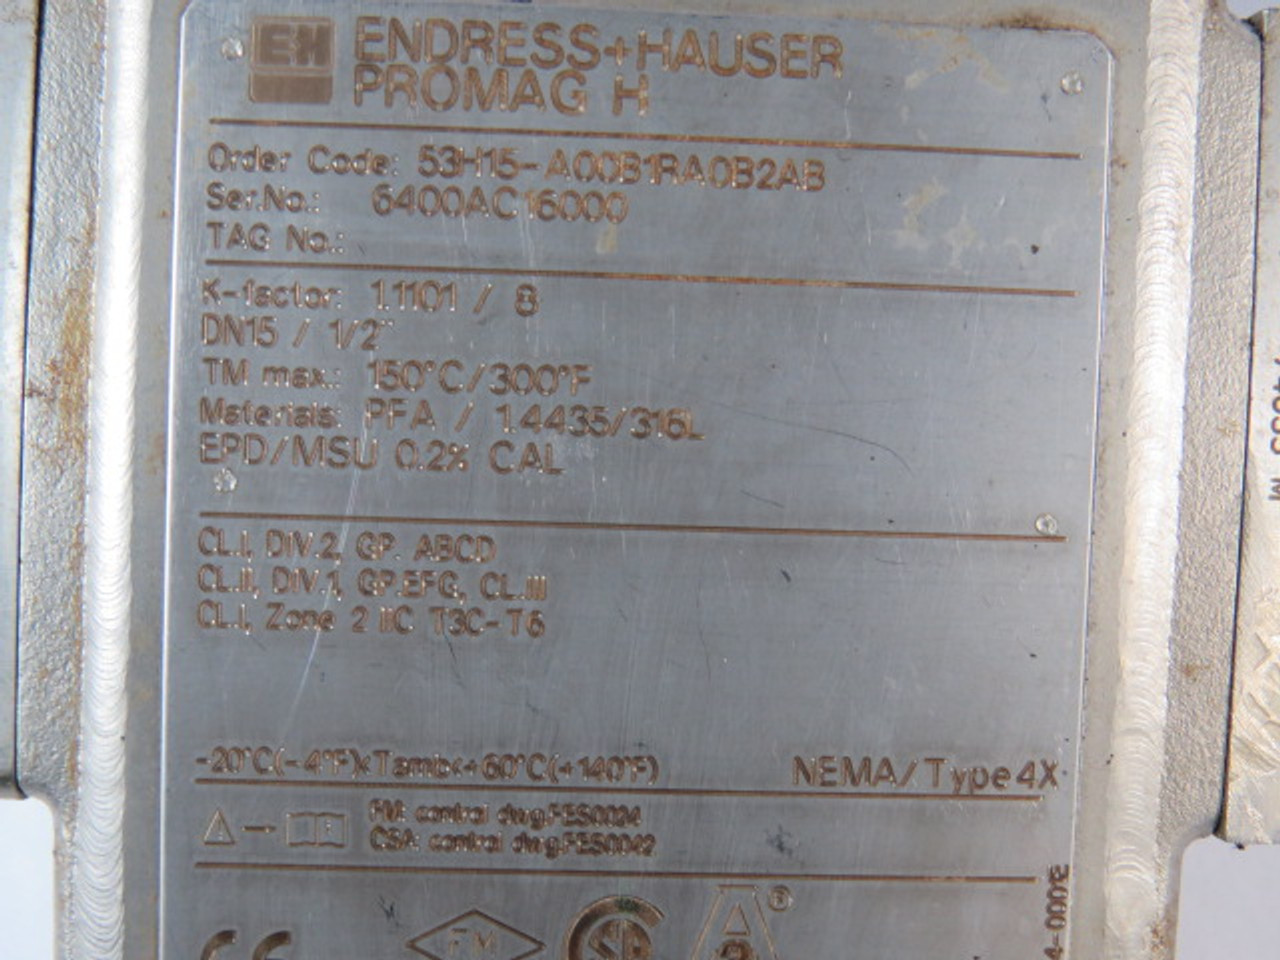 Endress+Hauser 53H15-A00B1RA0B2AB Electromagnetic Flow Meter 85-260VAC USED